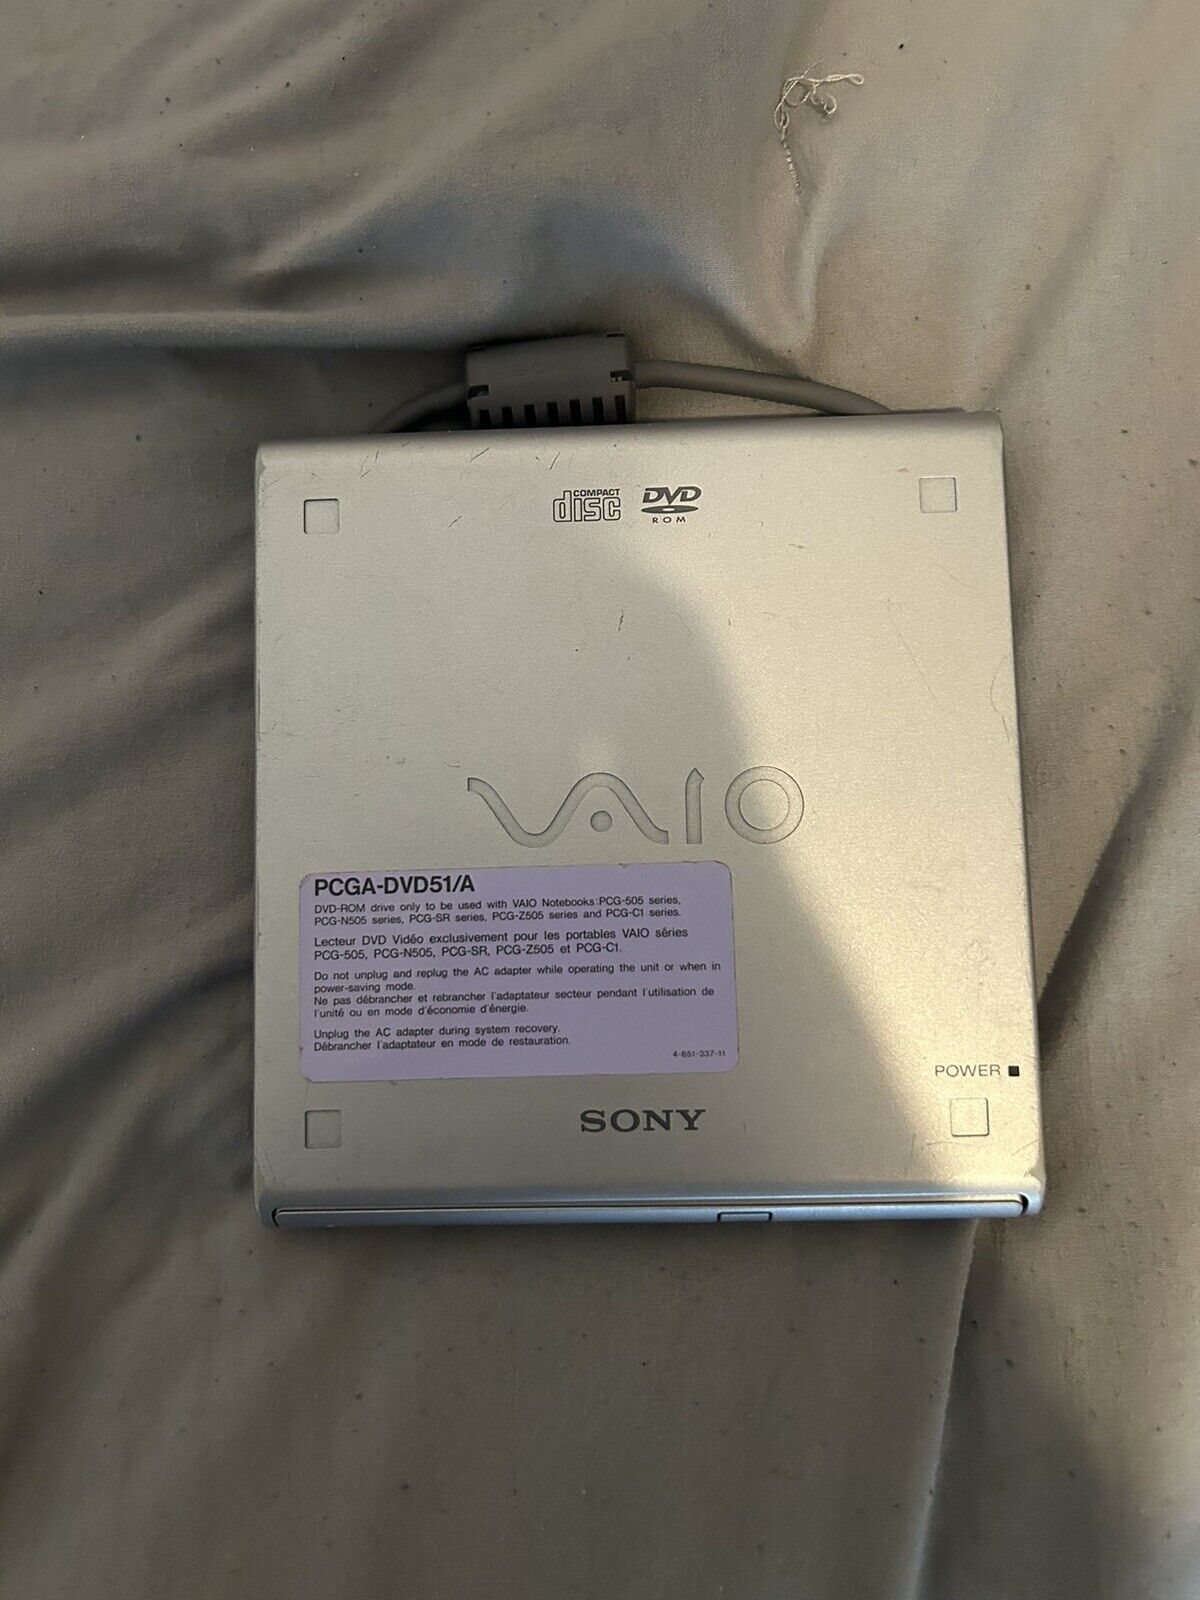 Sony External 8x Speed DVD-ROM Disk Drive PC Card/PCMCIA - White (PCGA-DVD51)